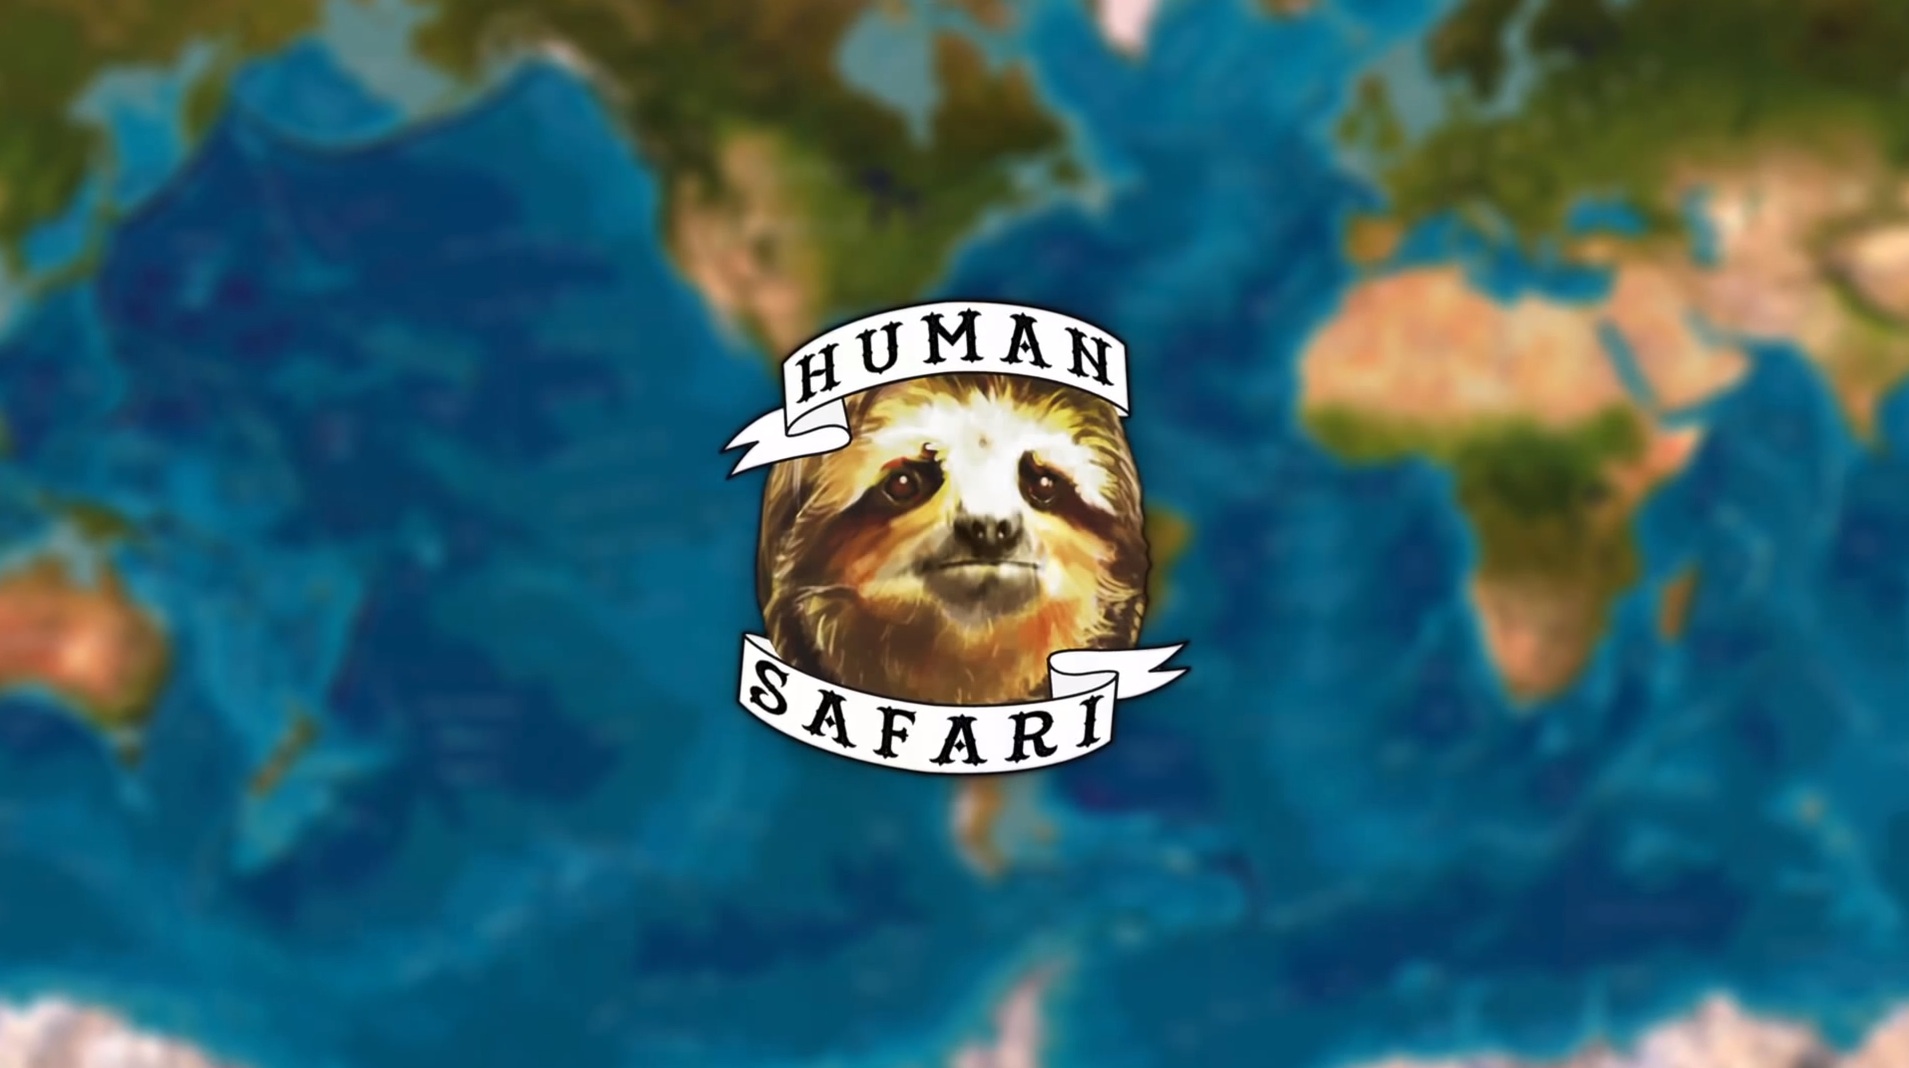 Human Safari